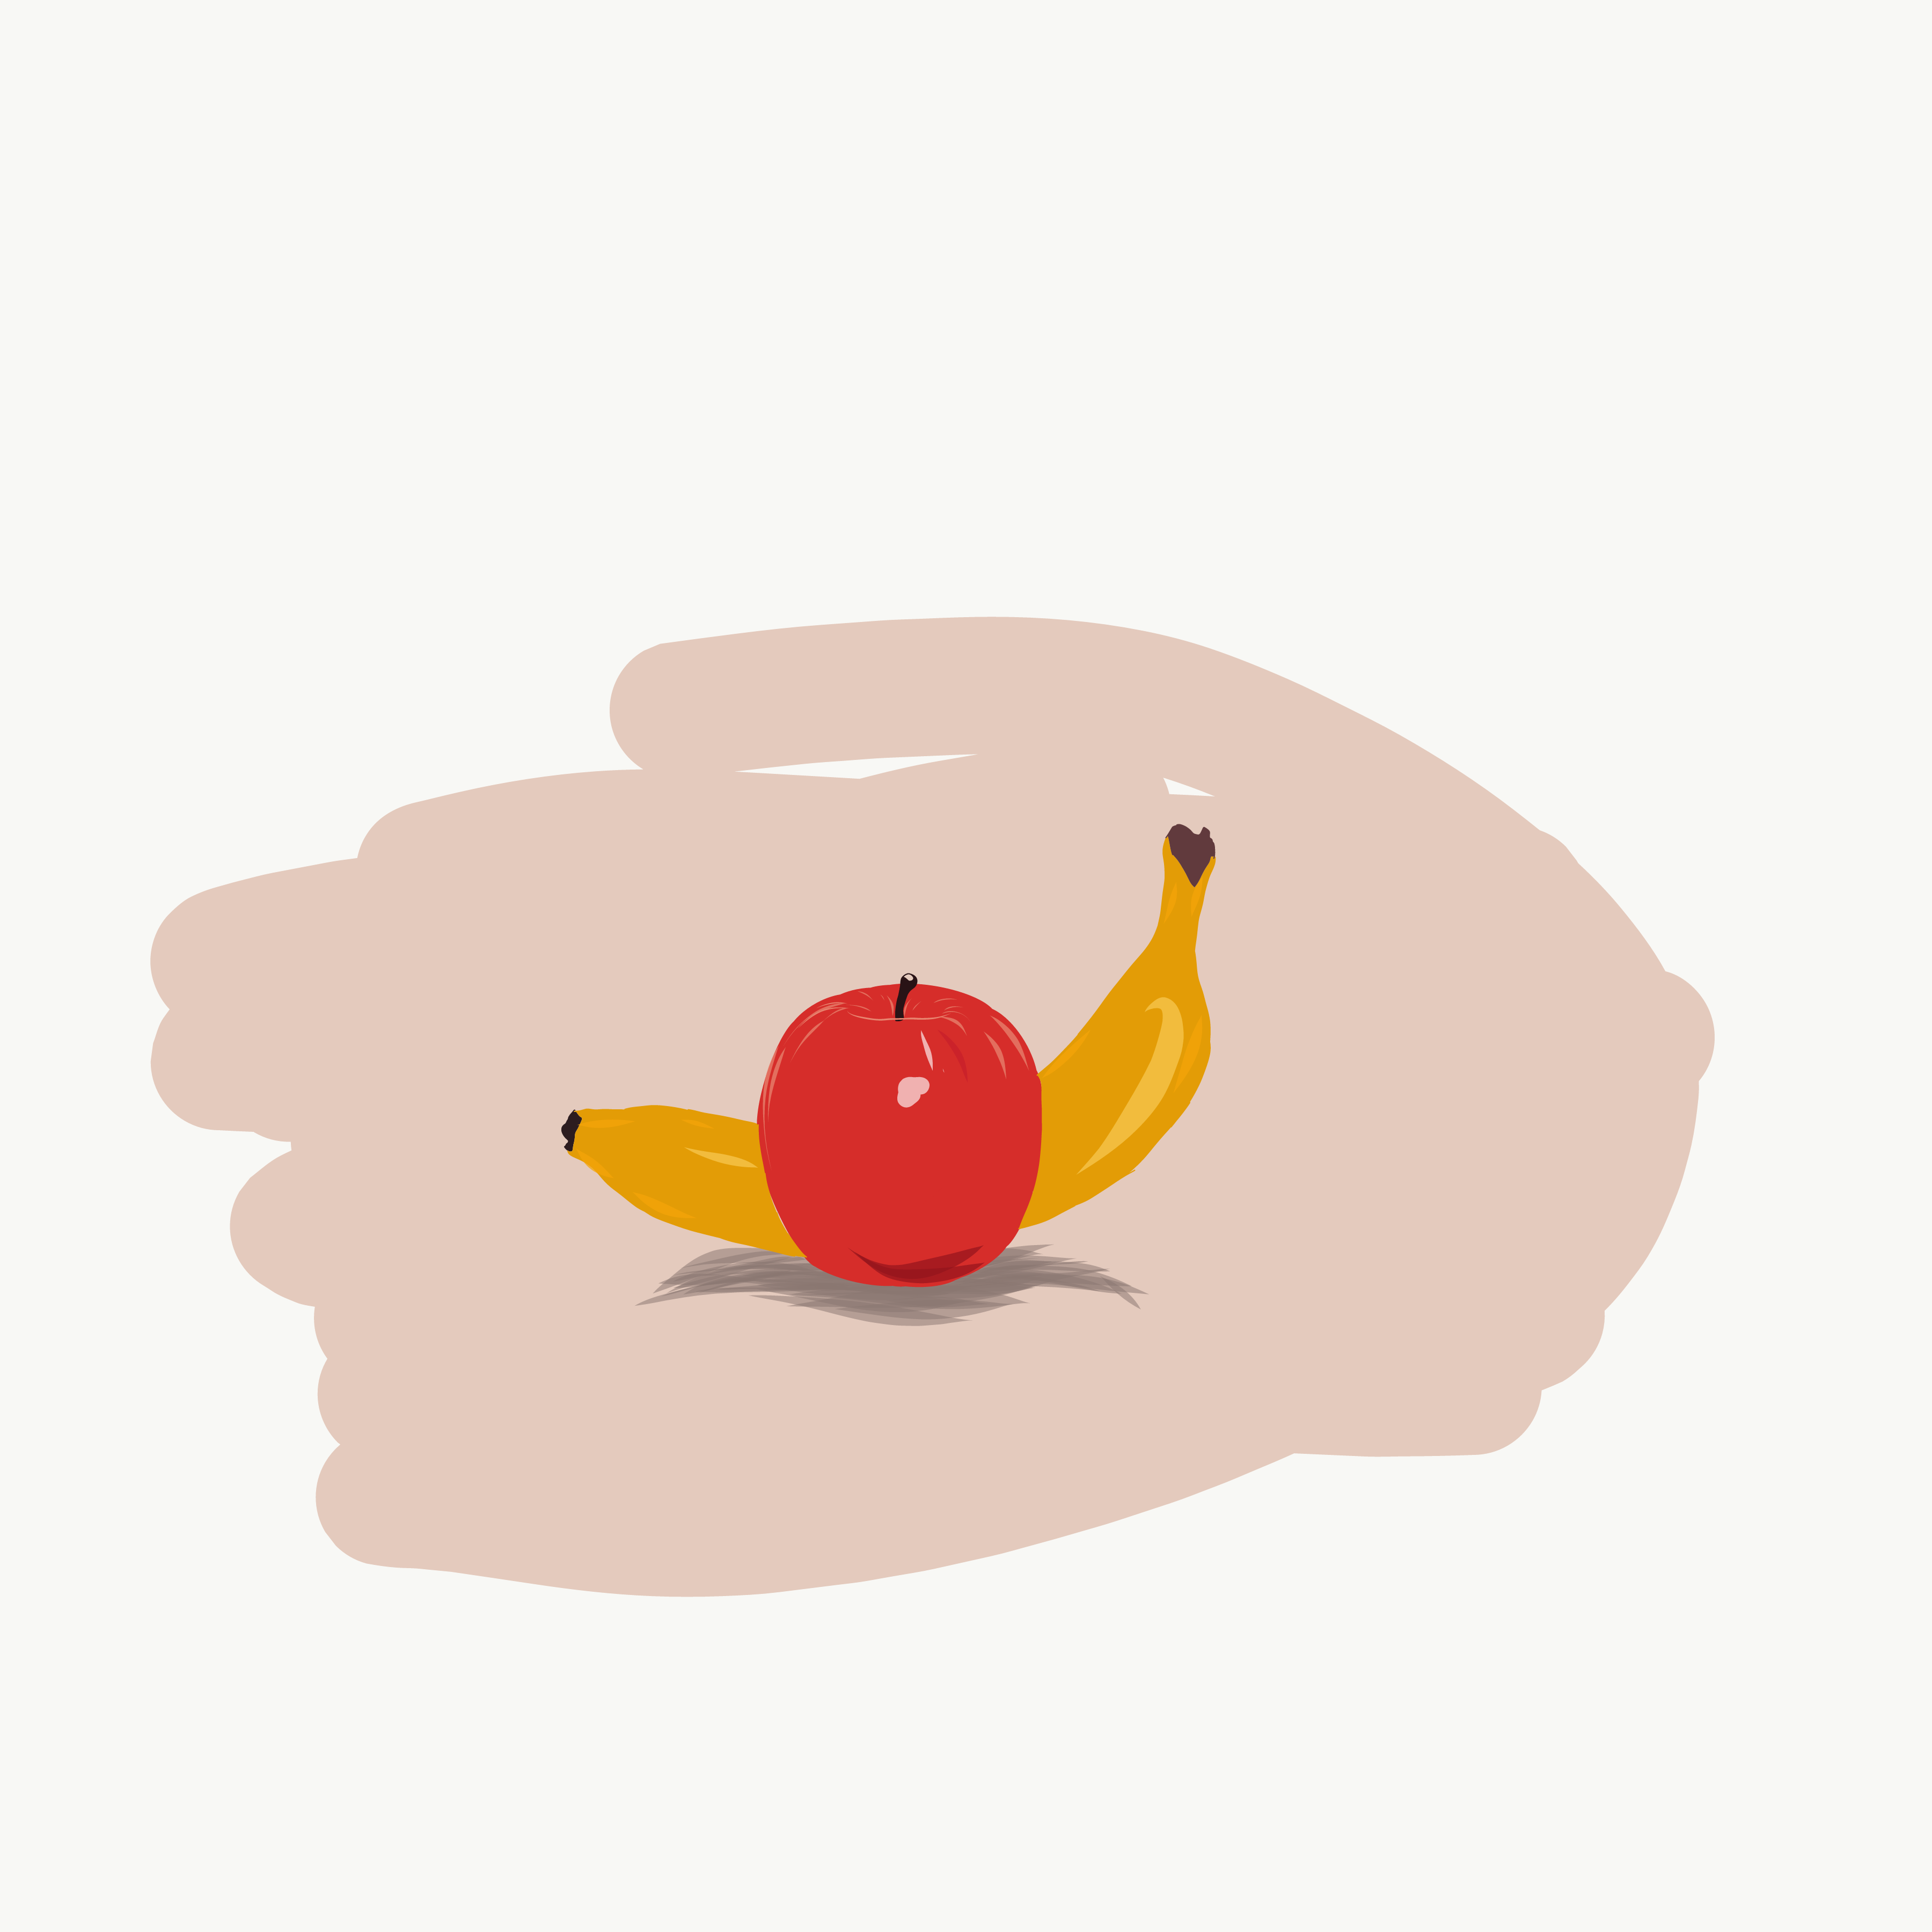 Apple and banana illustration